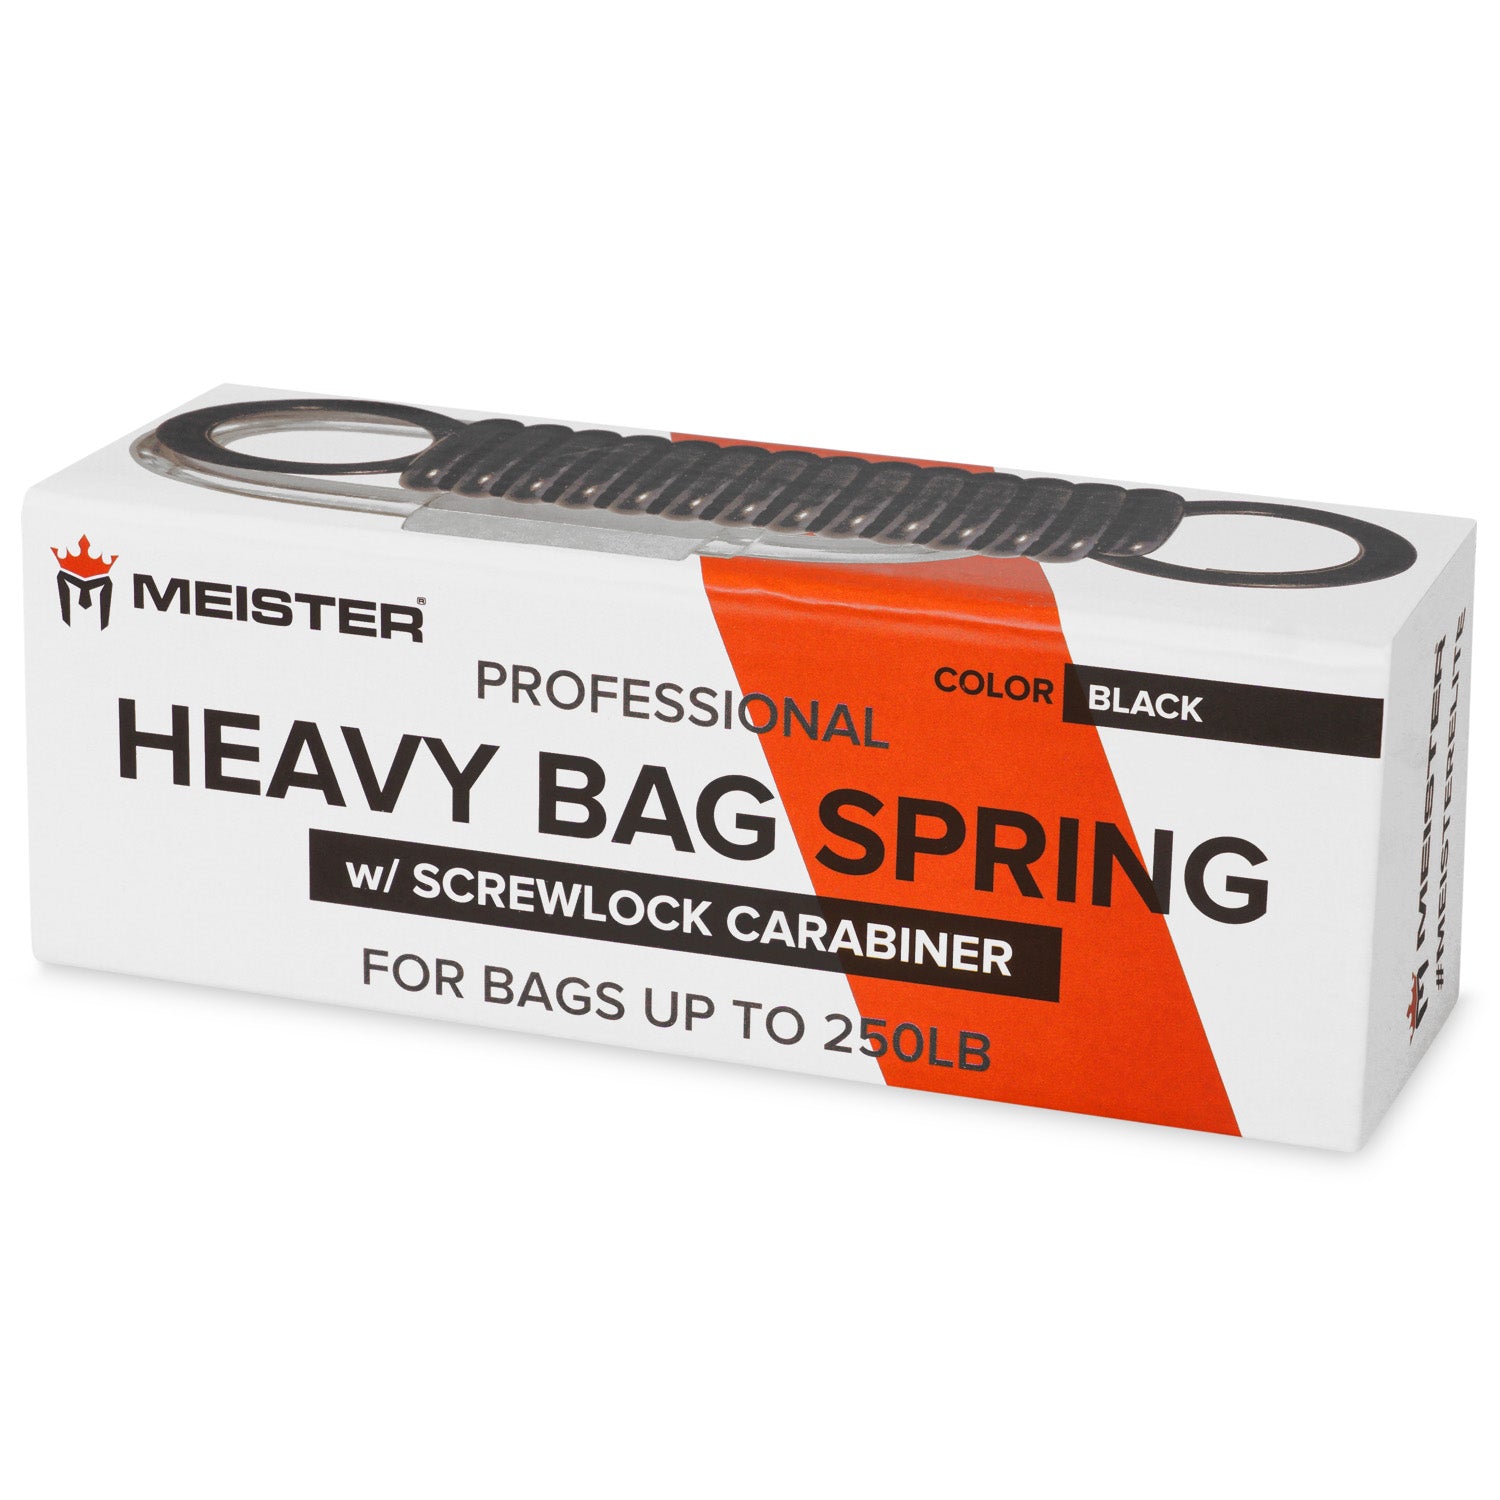 Meister Professional Heavy Bag Spring w/ Screwlock Carabiner